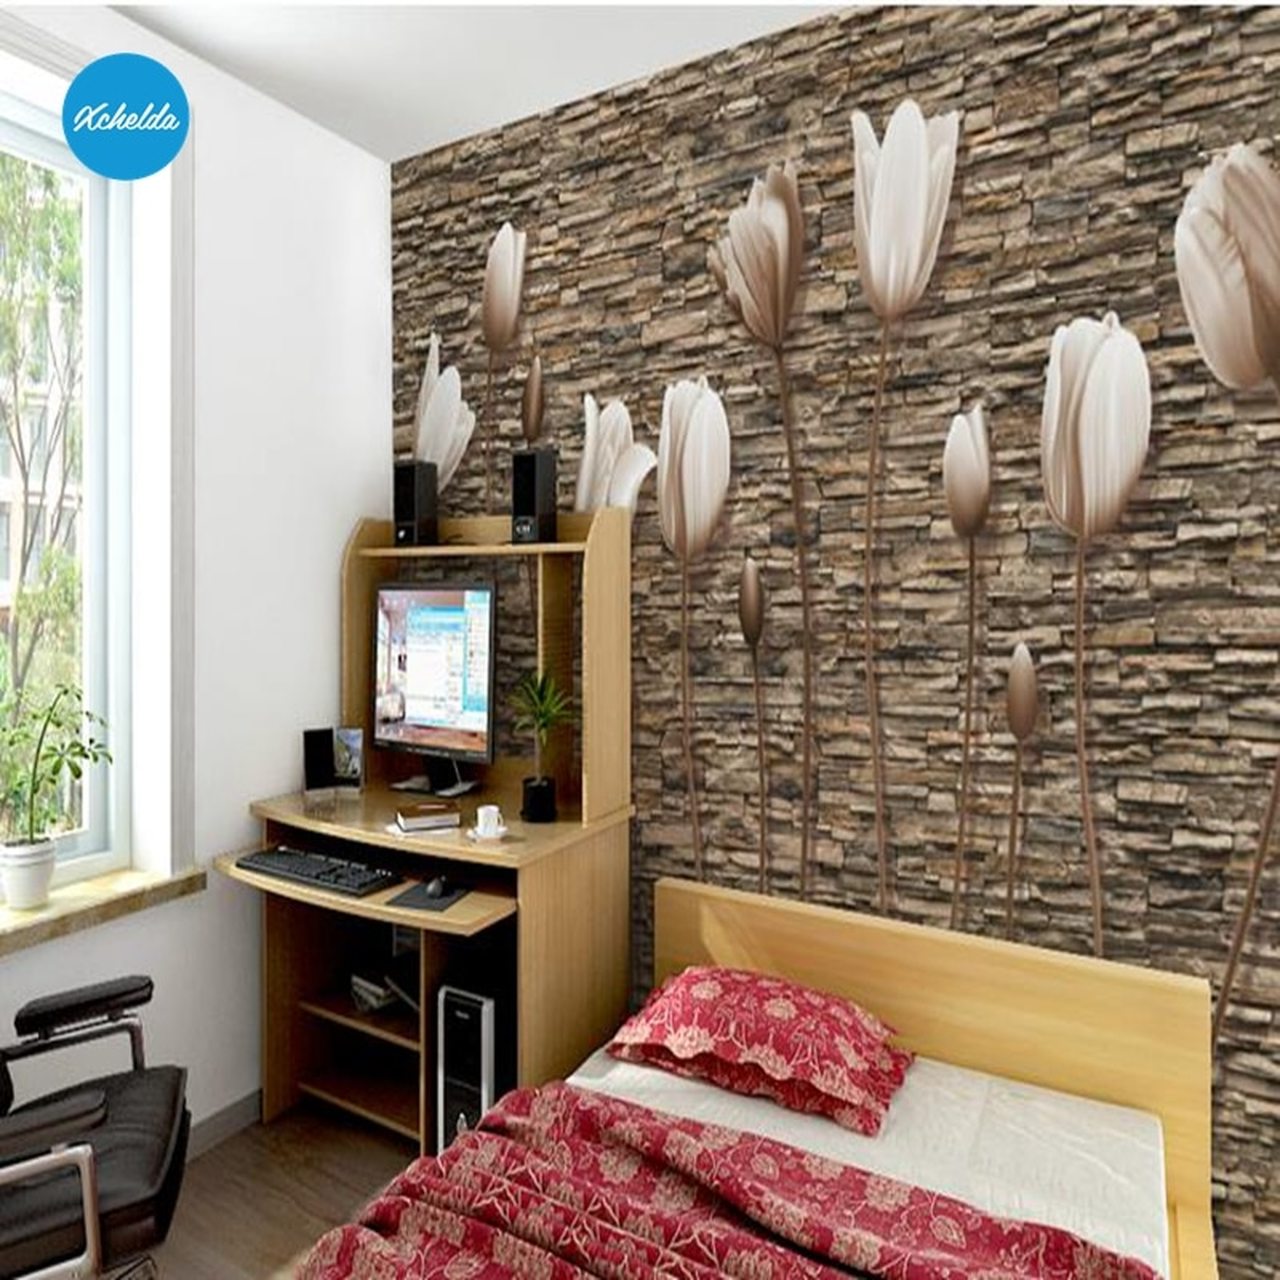 room wallpaper,wall,room,furniture,interior design,brick